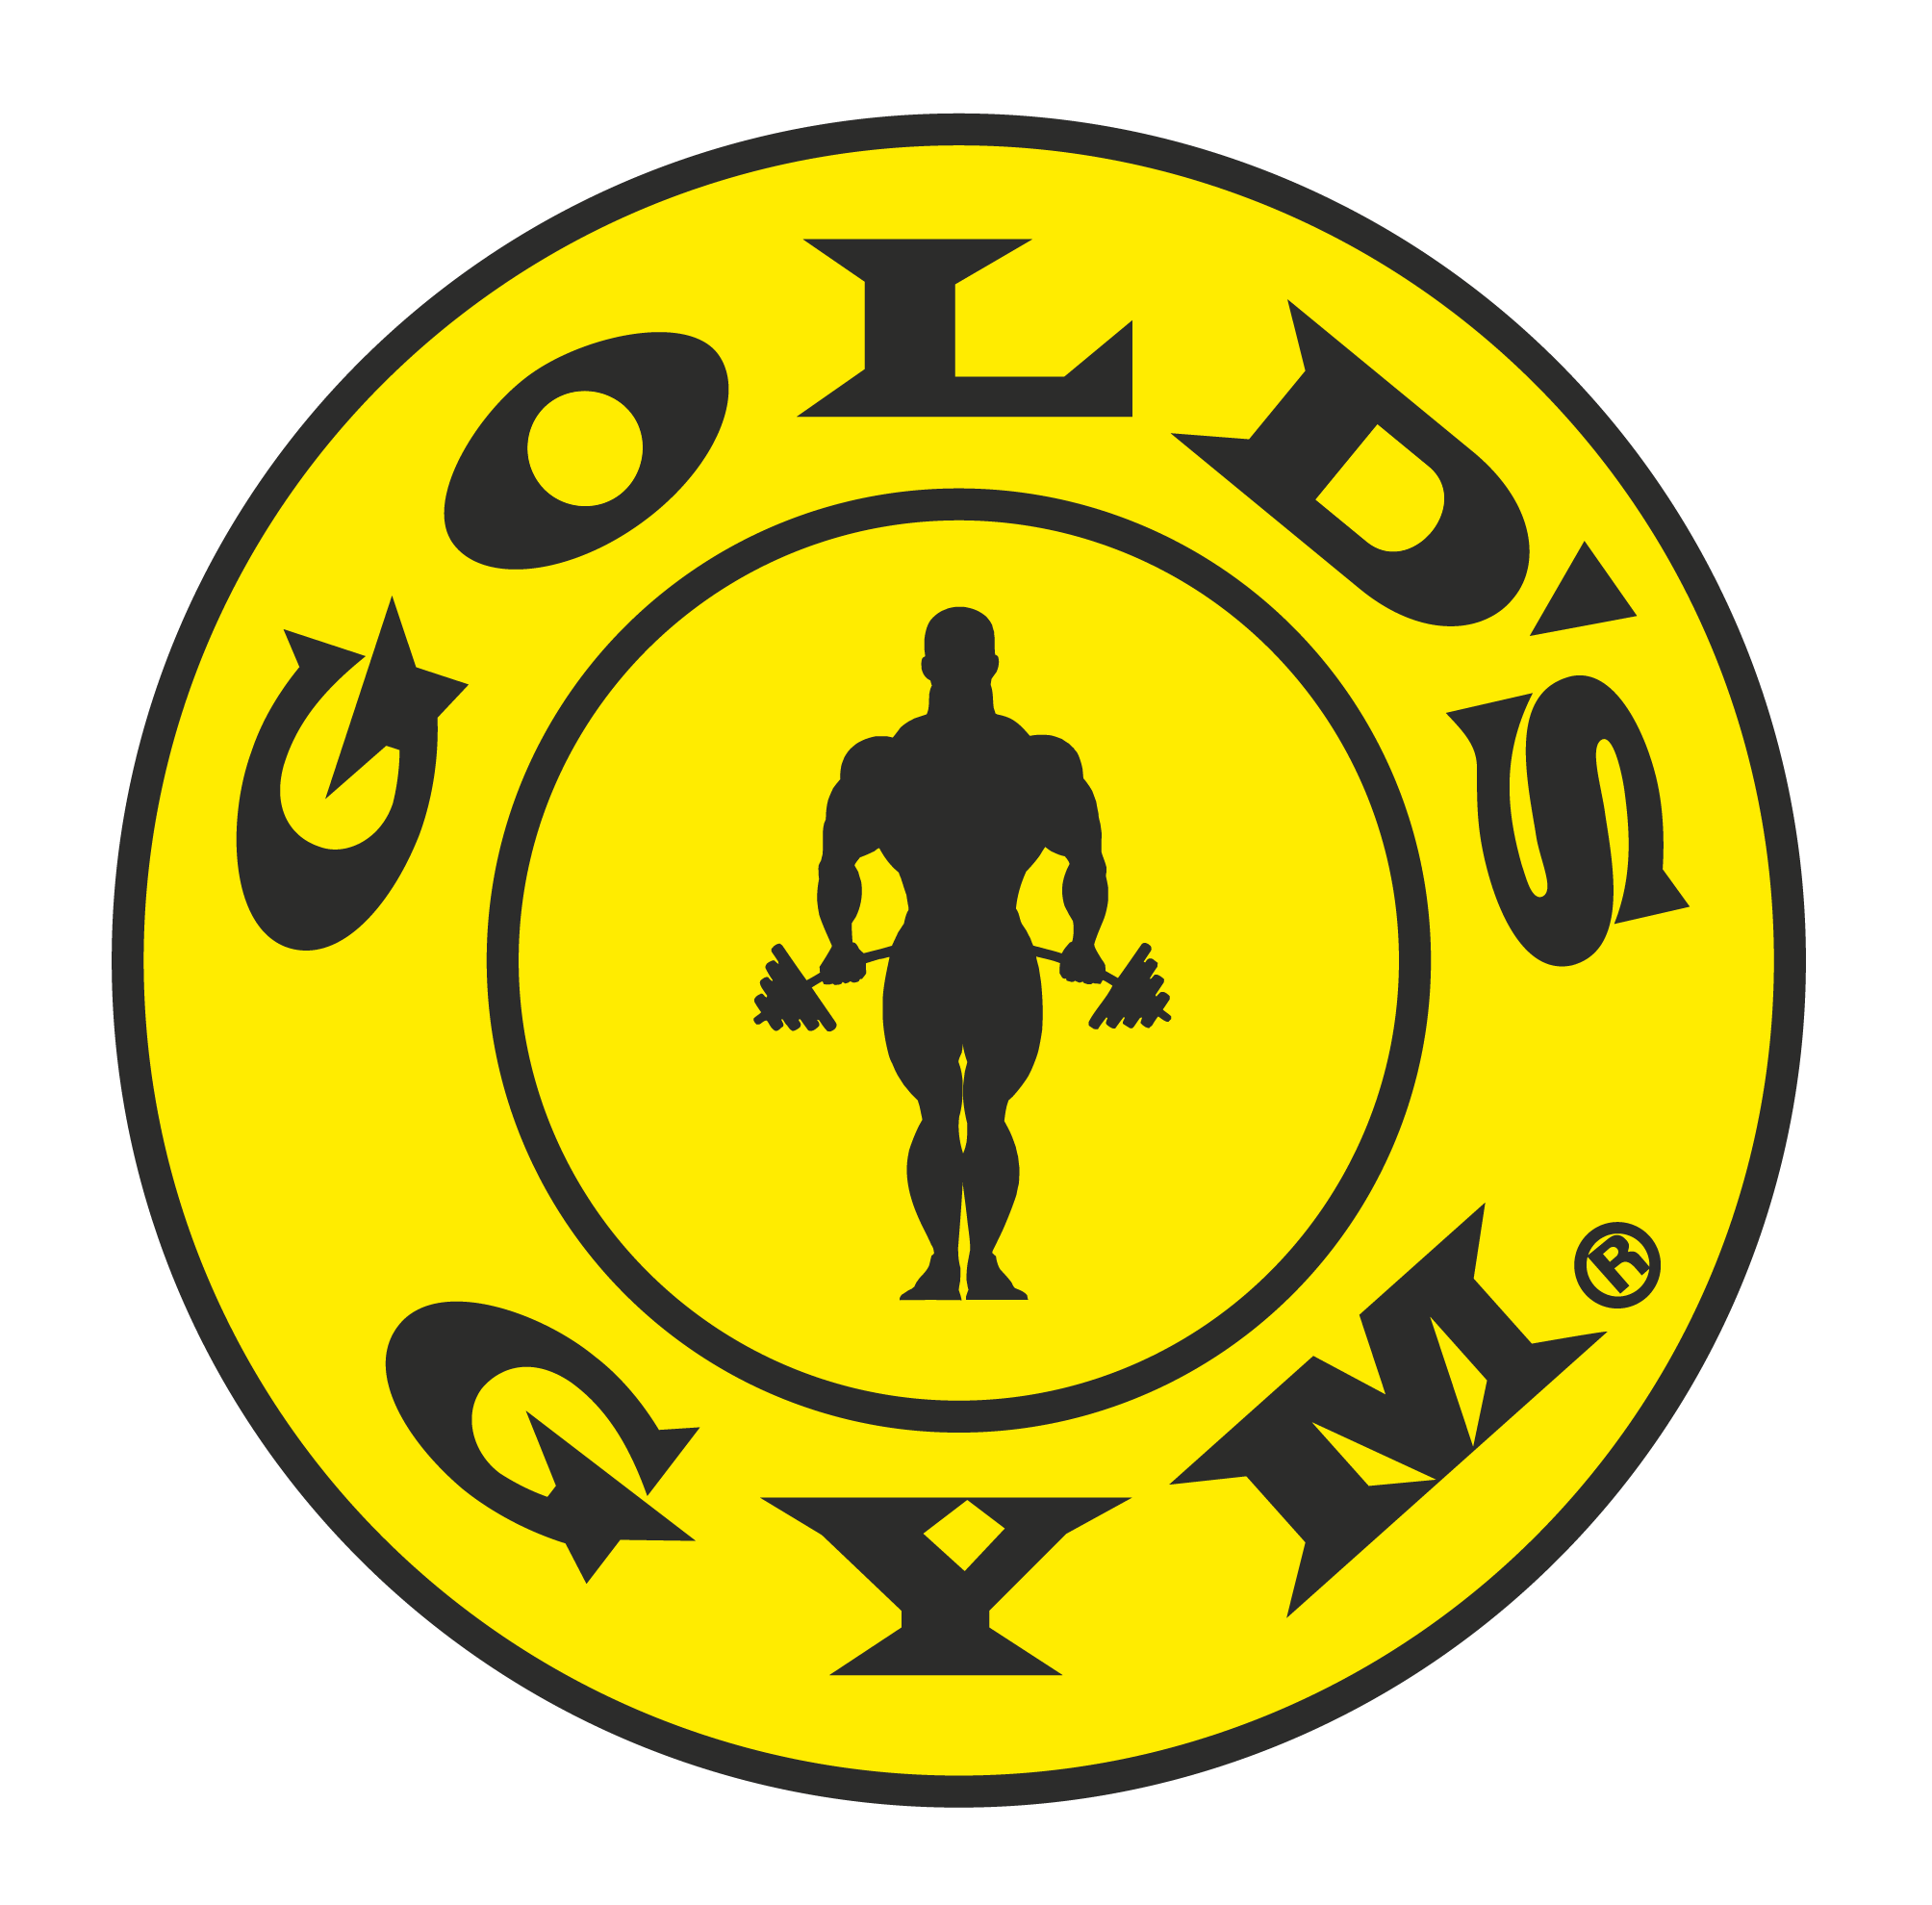 GOLD Gym